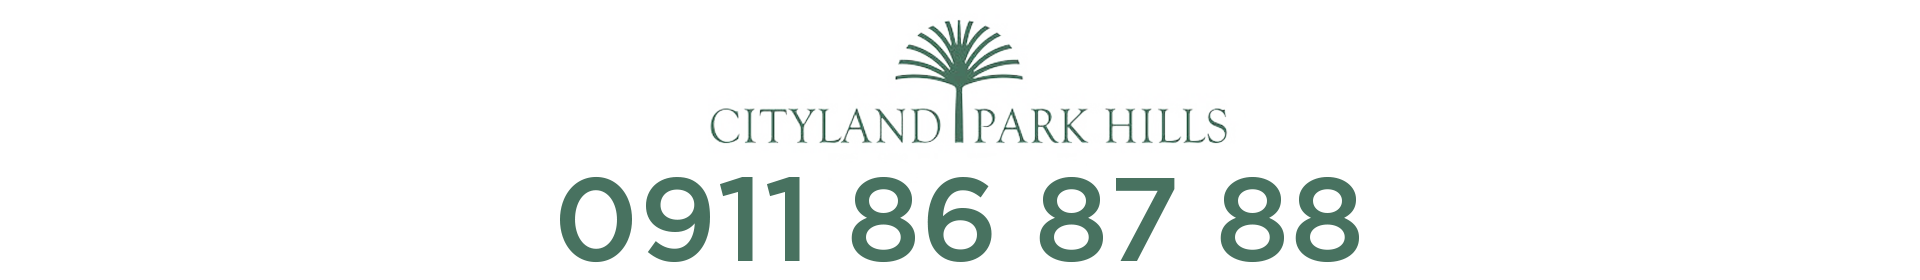 Cityland Park Hills Hotline: 0911 86 87 88